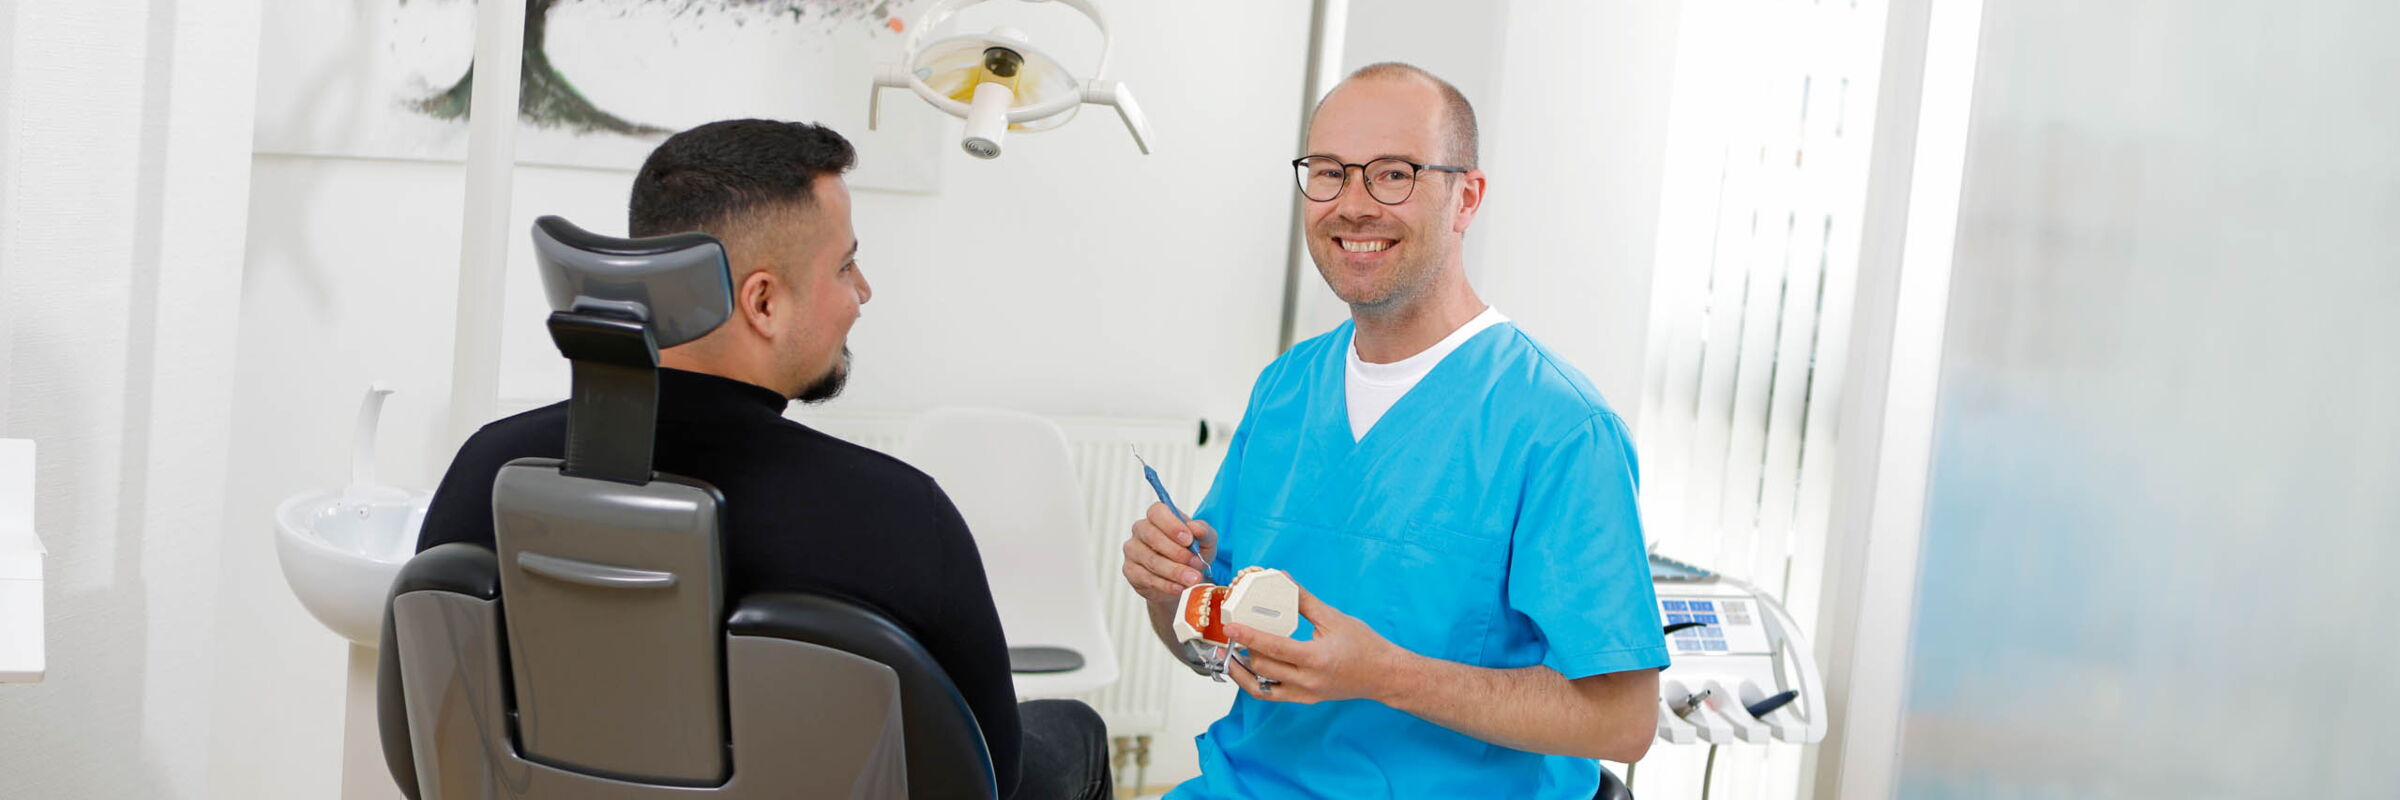 Parodontologie | Zahnarztpraxis Klenke in Baunatal